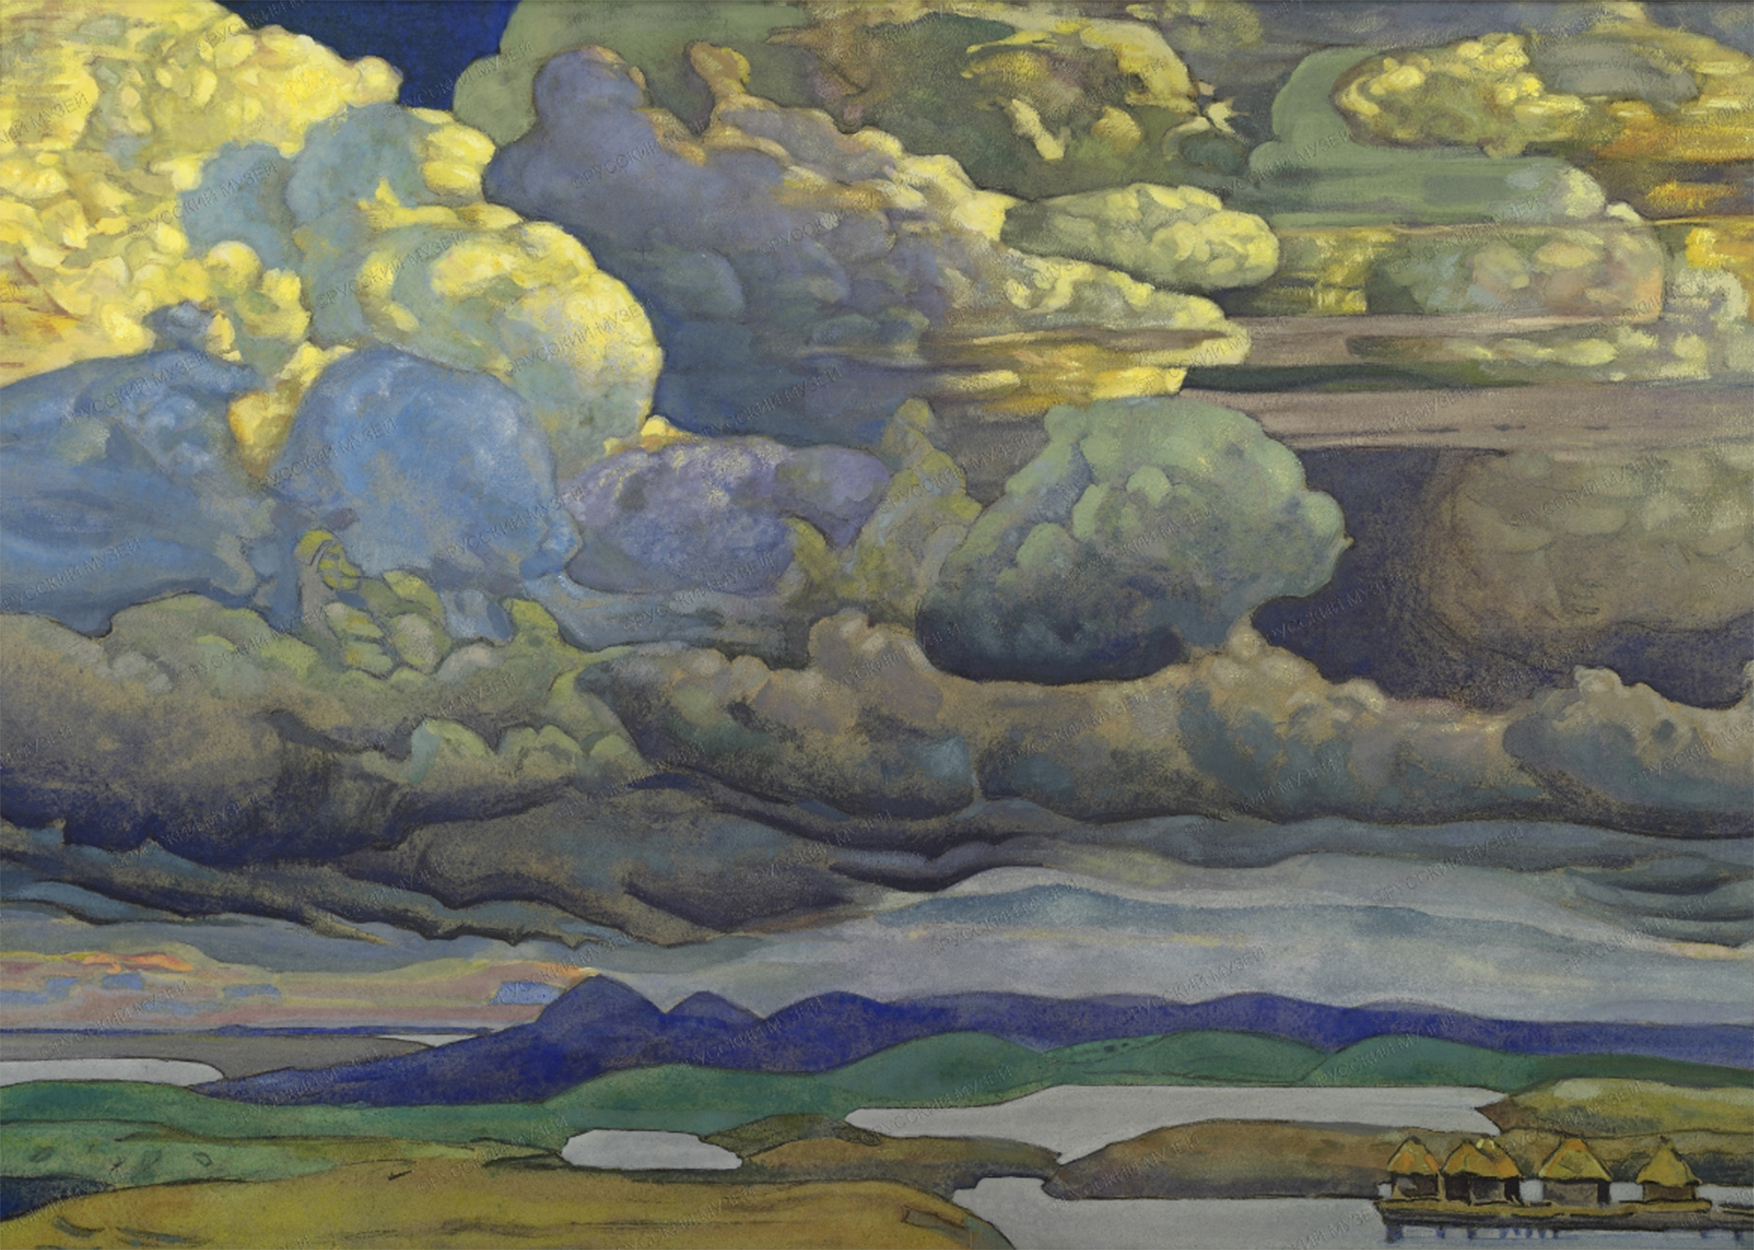 天空の戦い by Nicholas Roerich - 1912 - 66 x 95 cm 